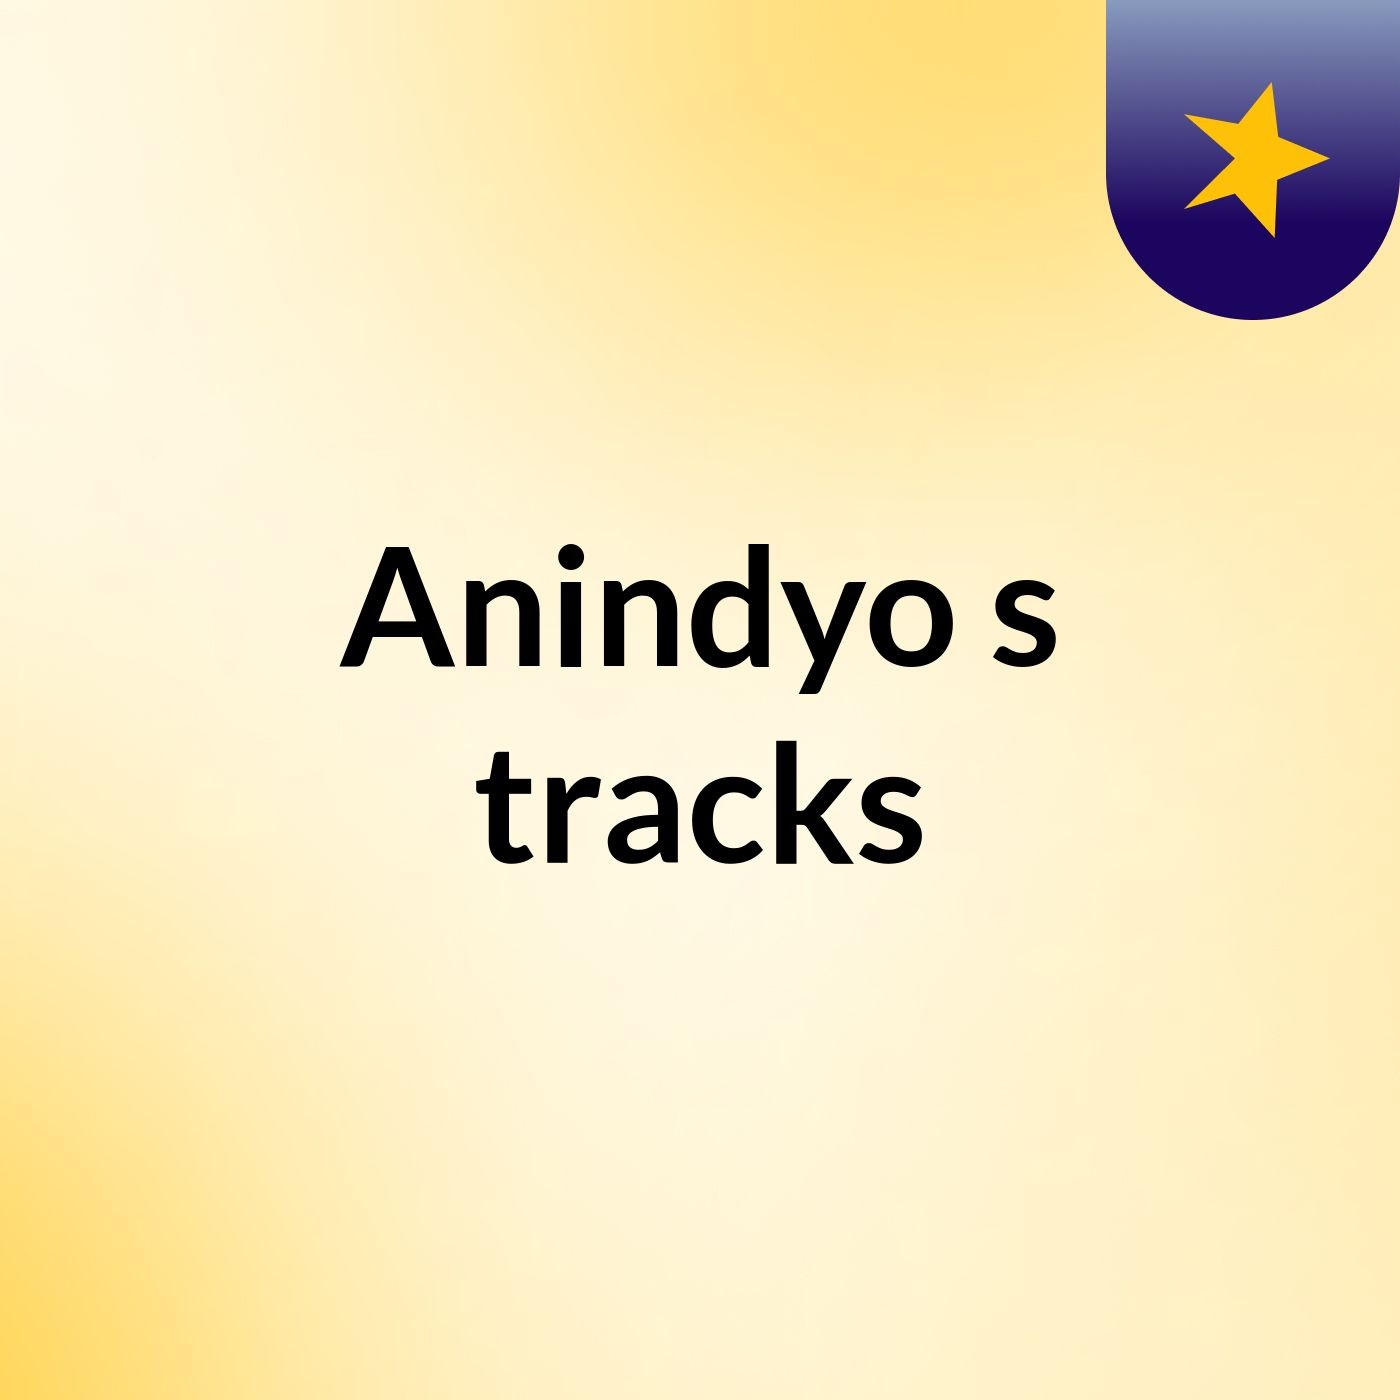 Anindyo's tracks